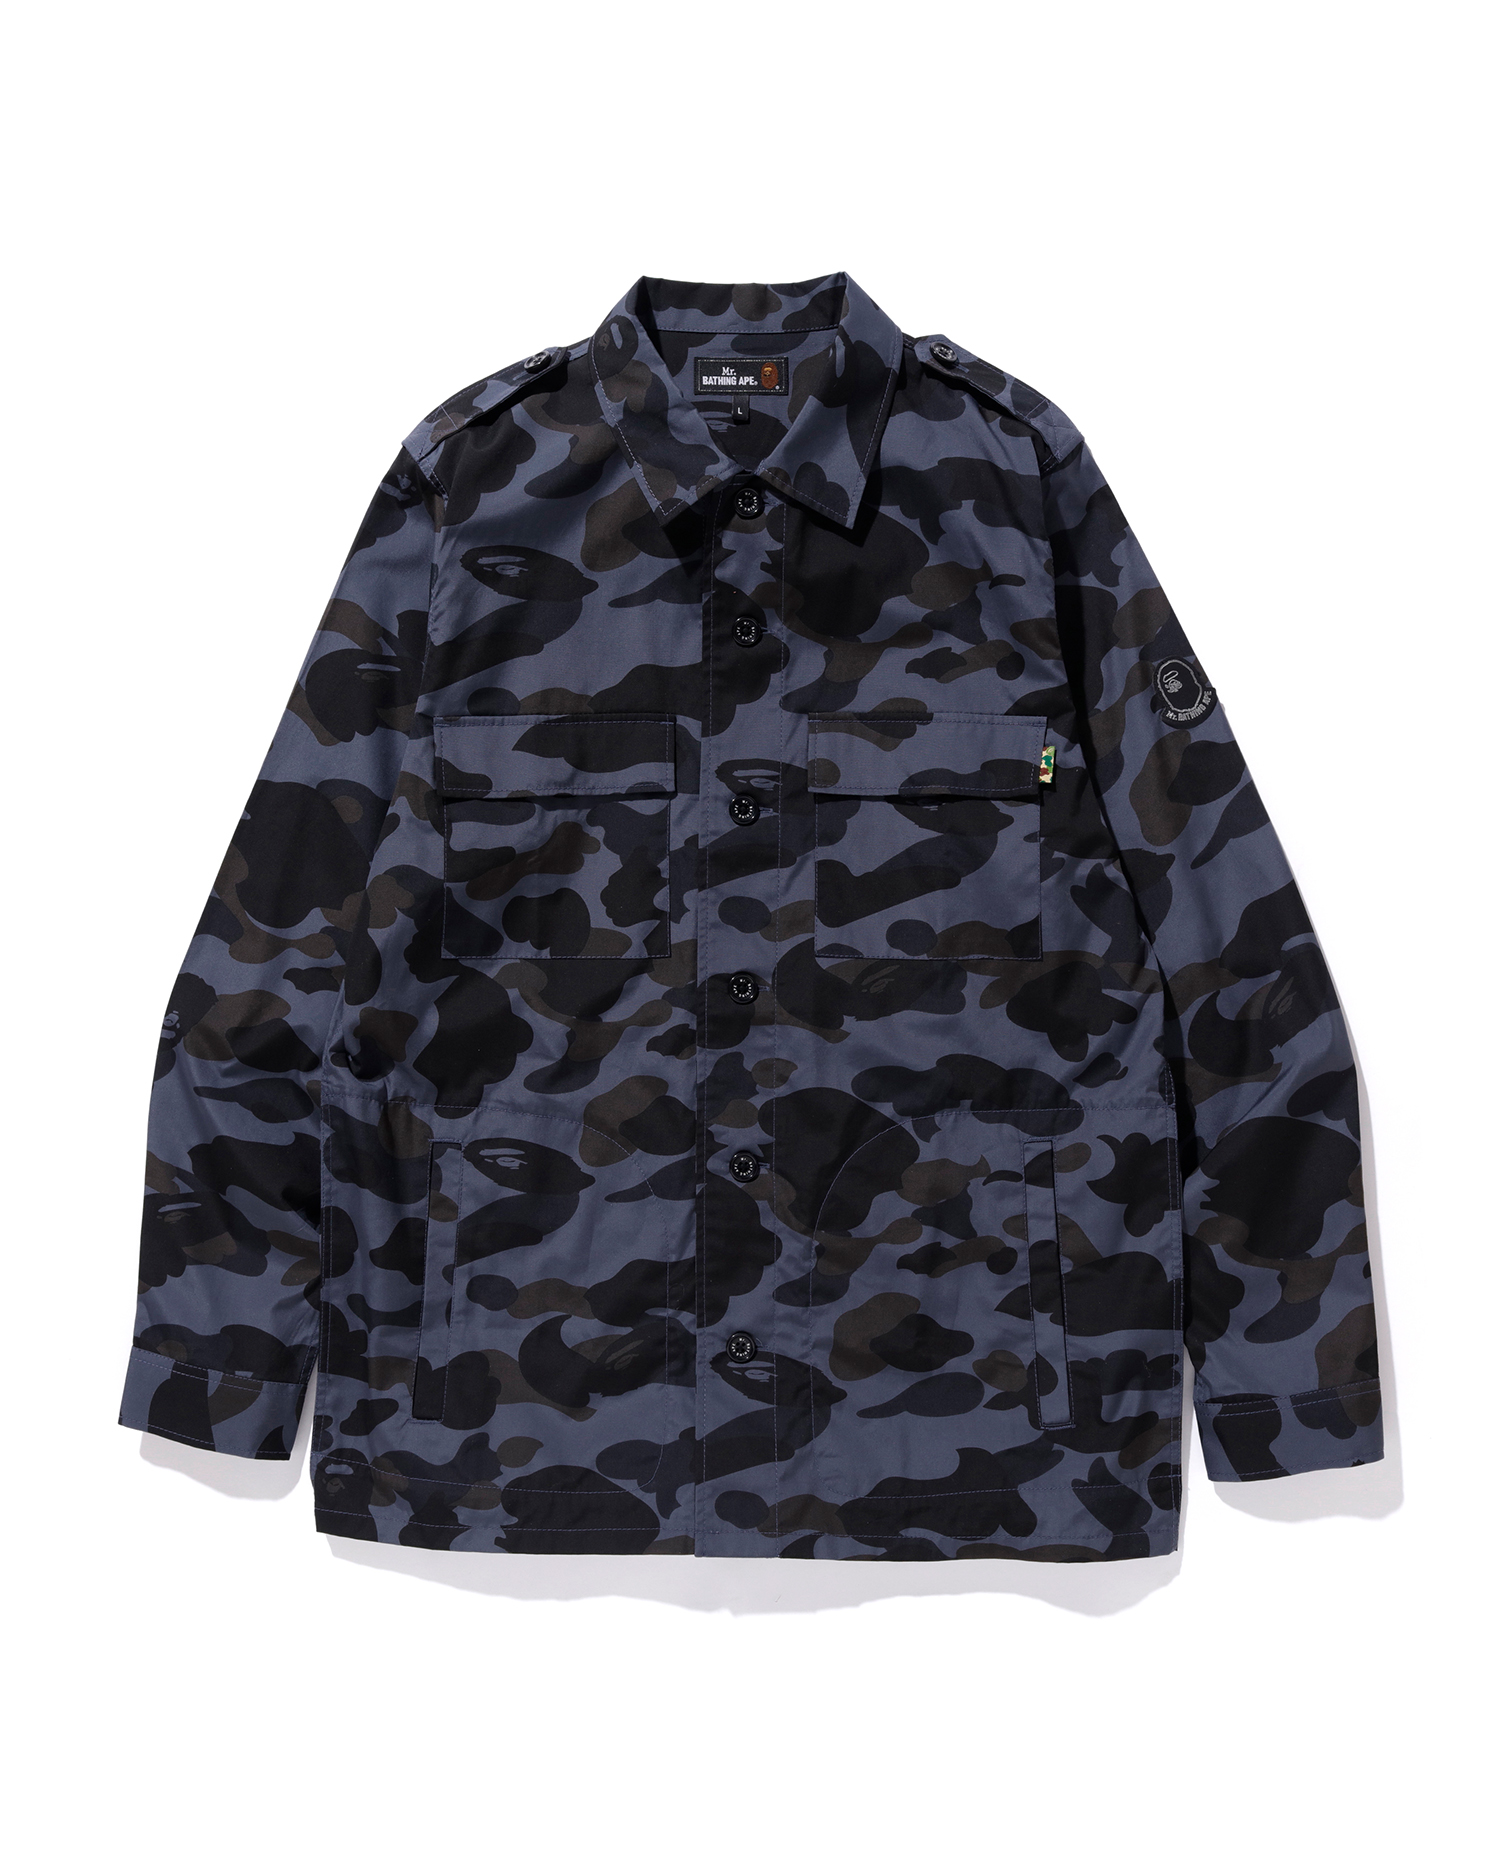 Shop 1st Camo military shirt Online | BAPE